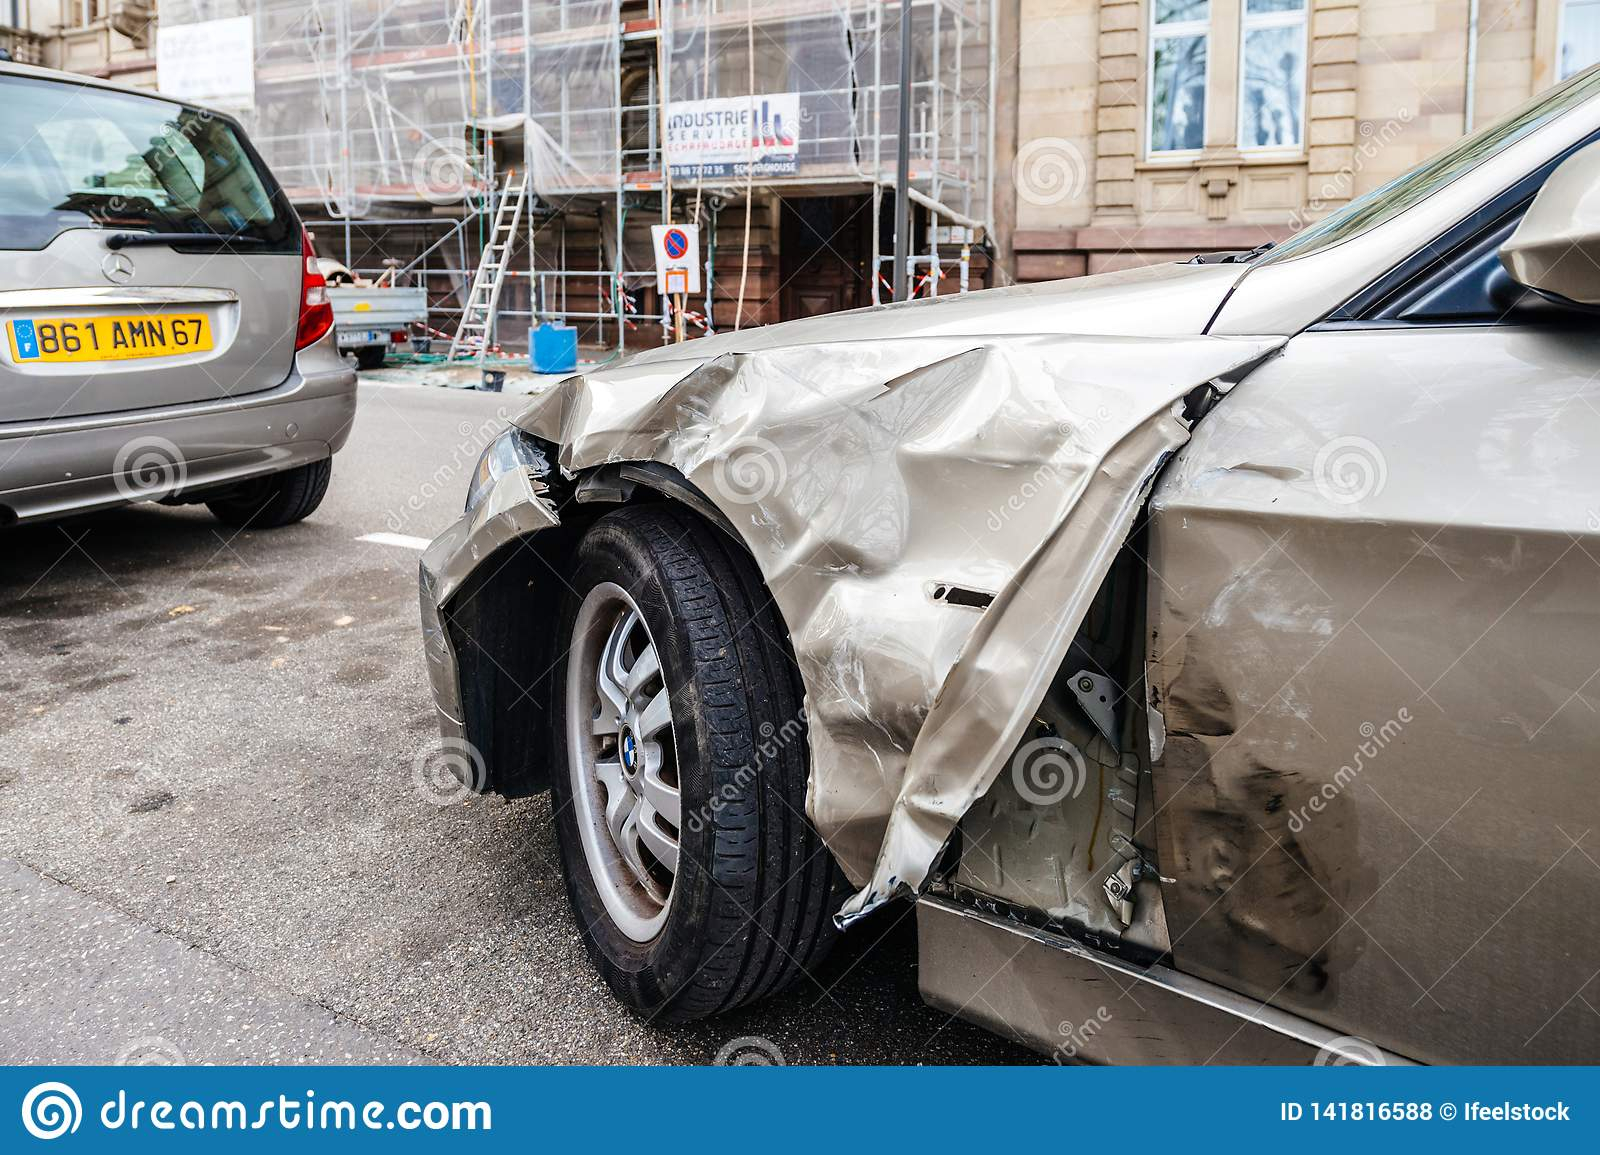 Luxury Bmw German Car Parked City Street Damaged Car throughout sizing 1600 X 1155